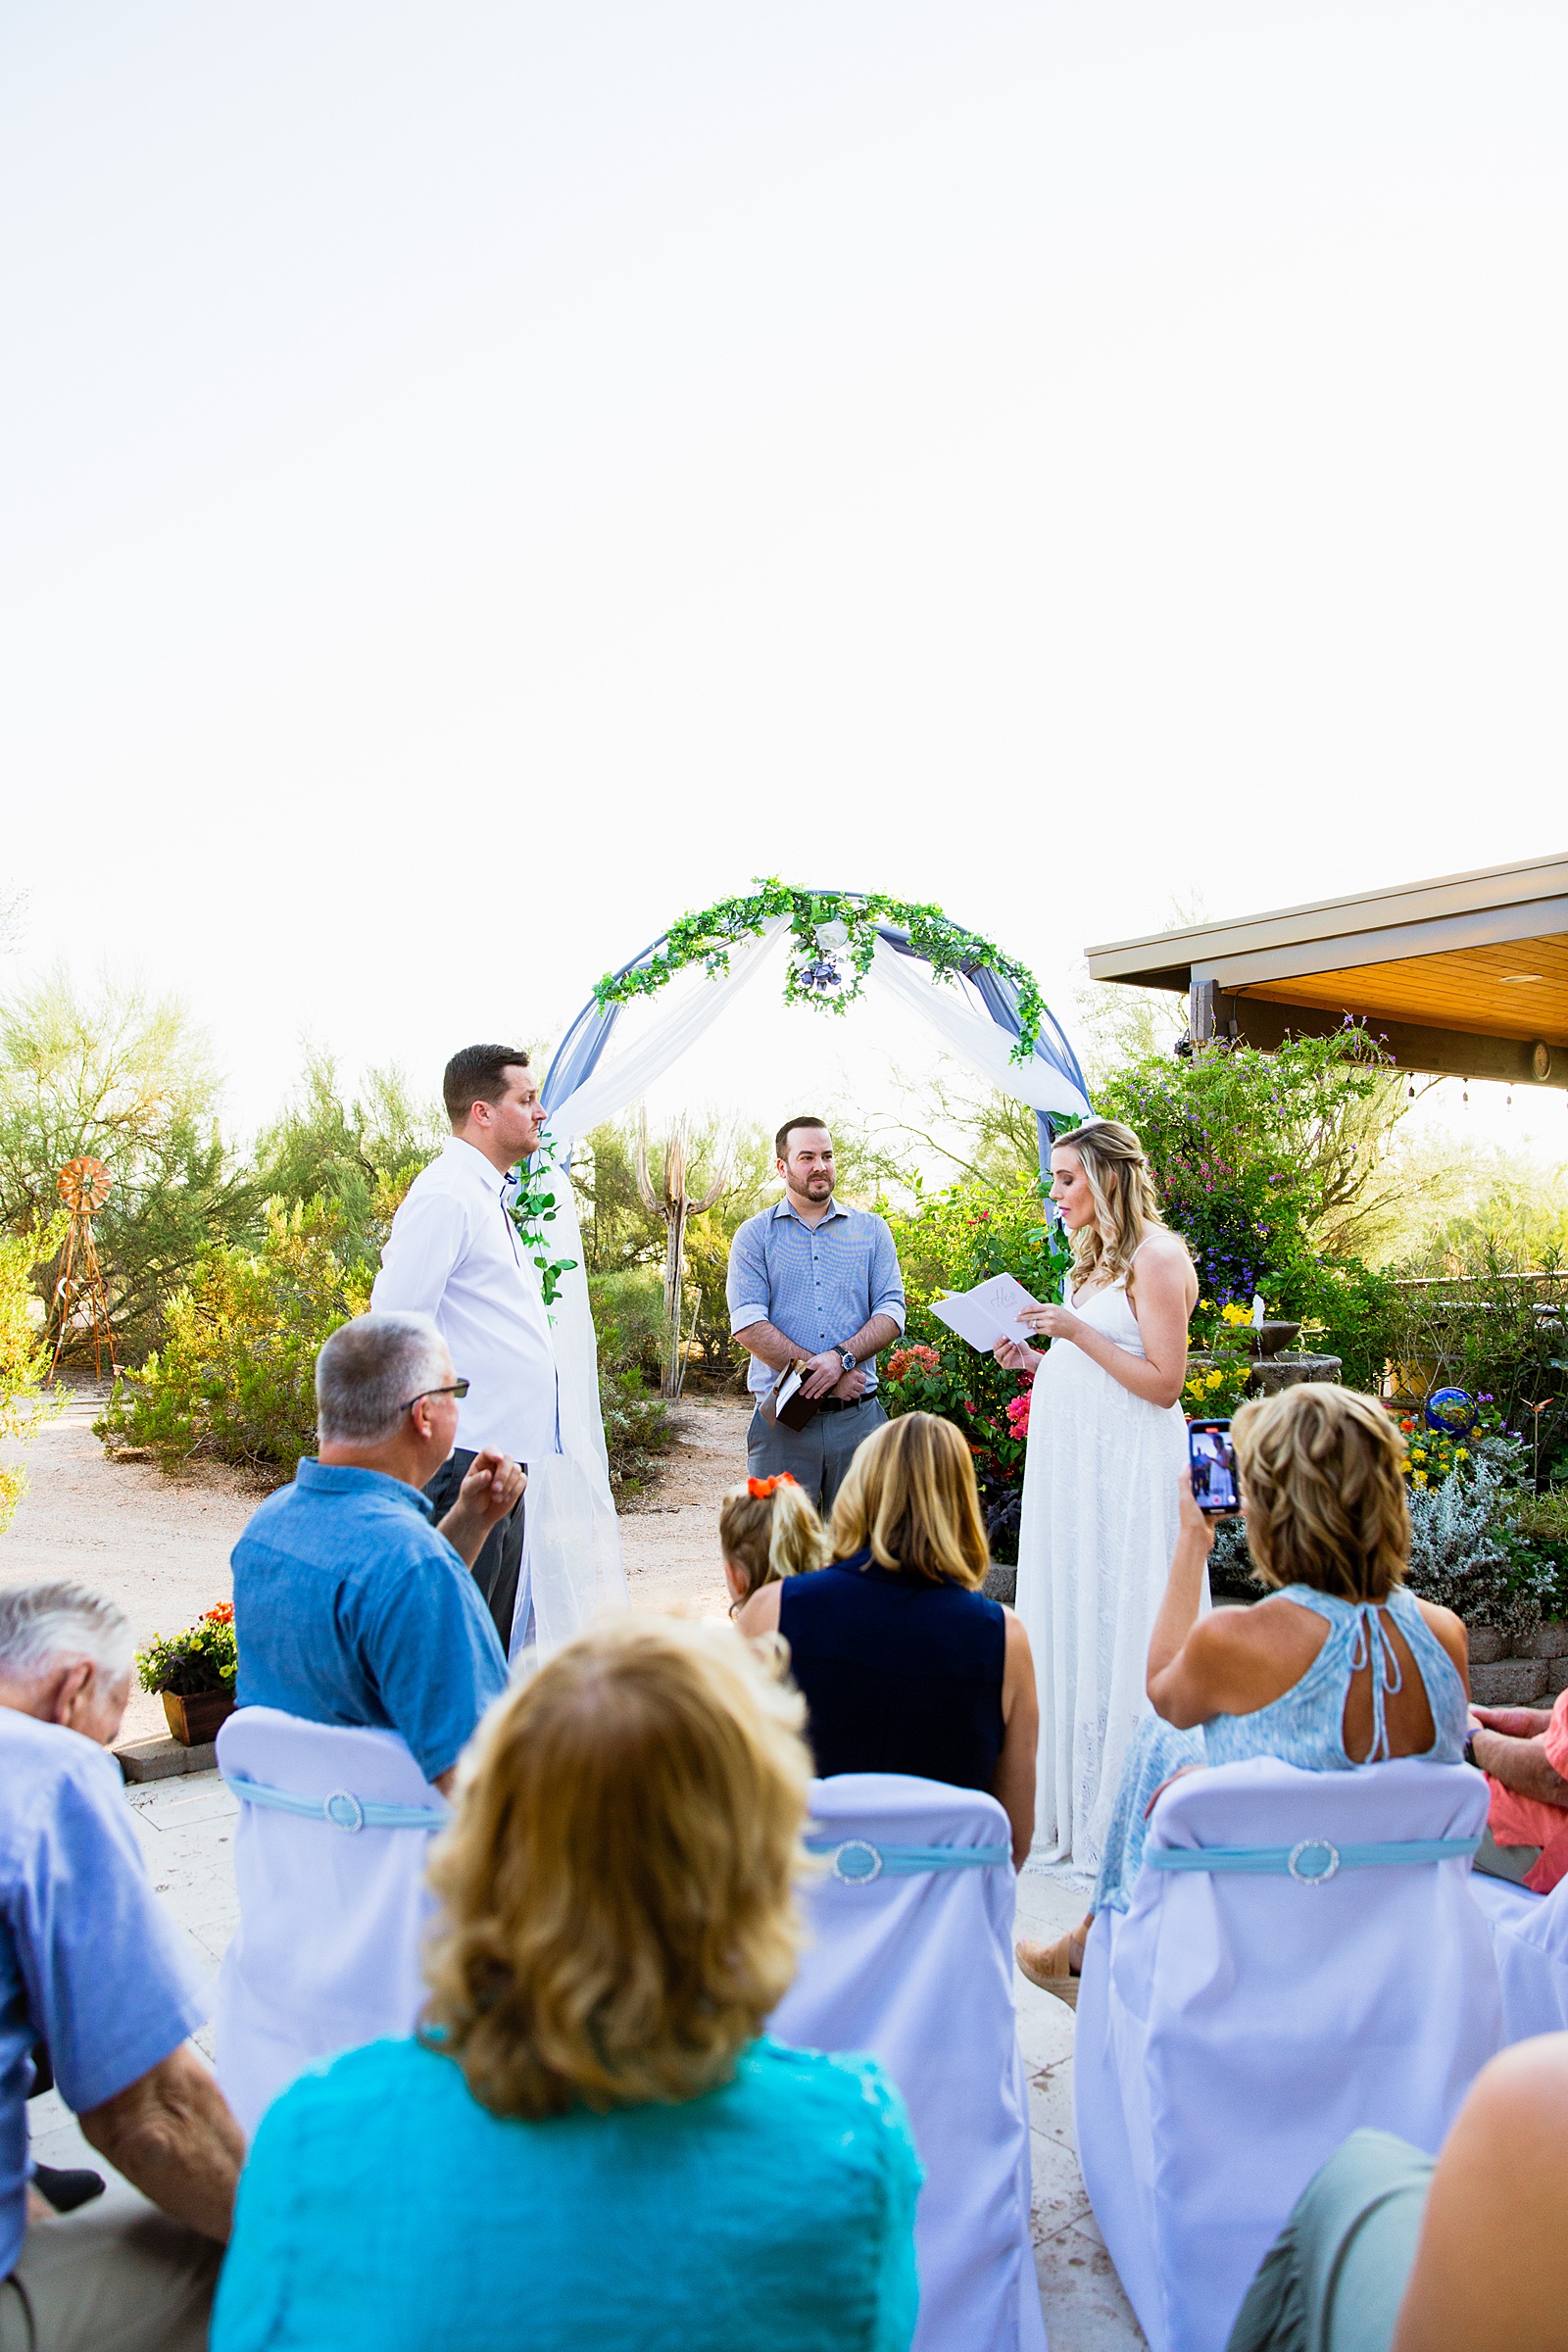 Wedding ceremony for a backyard garden elopement by Phoenix wedding photographer PMA Photography.